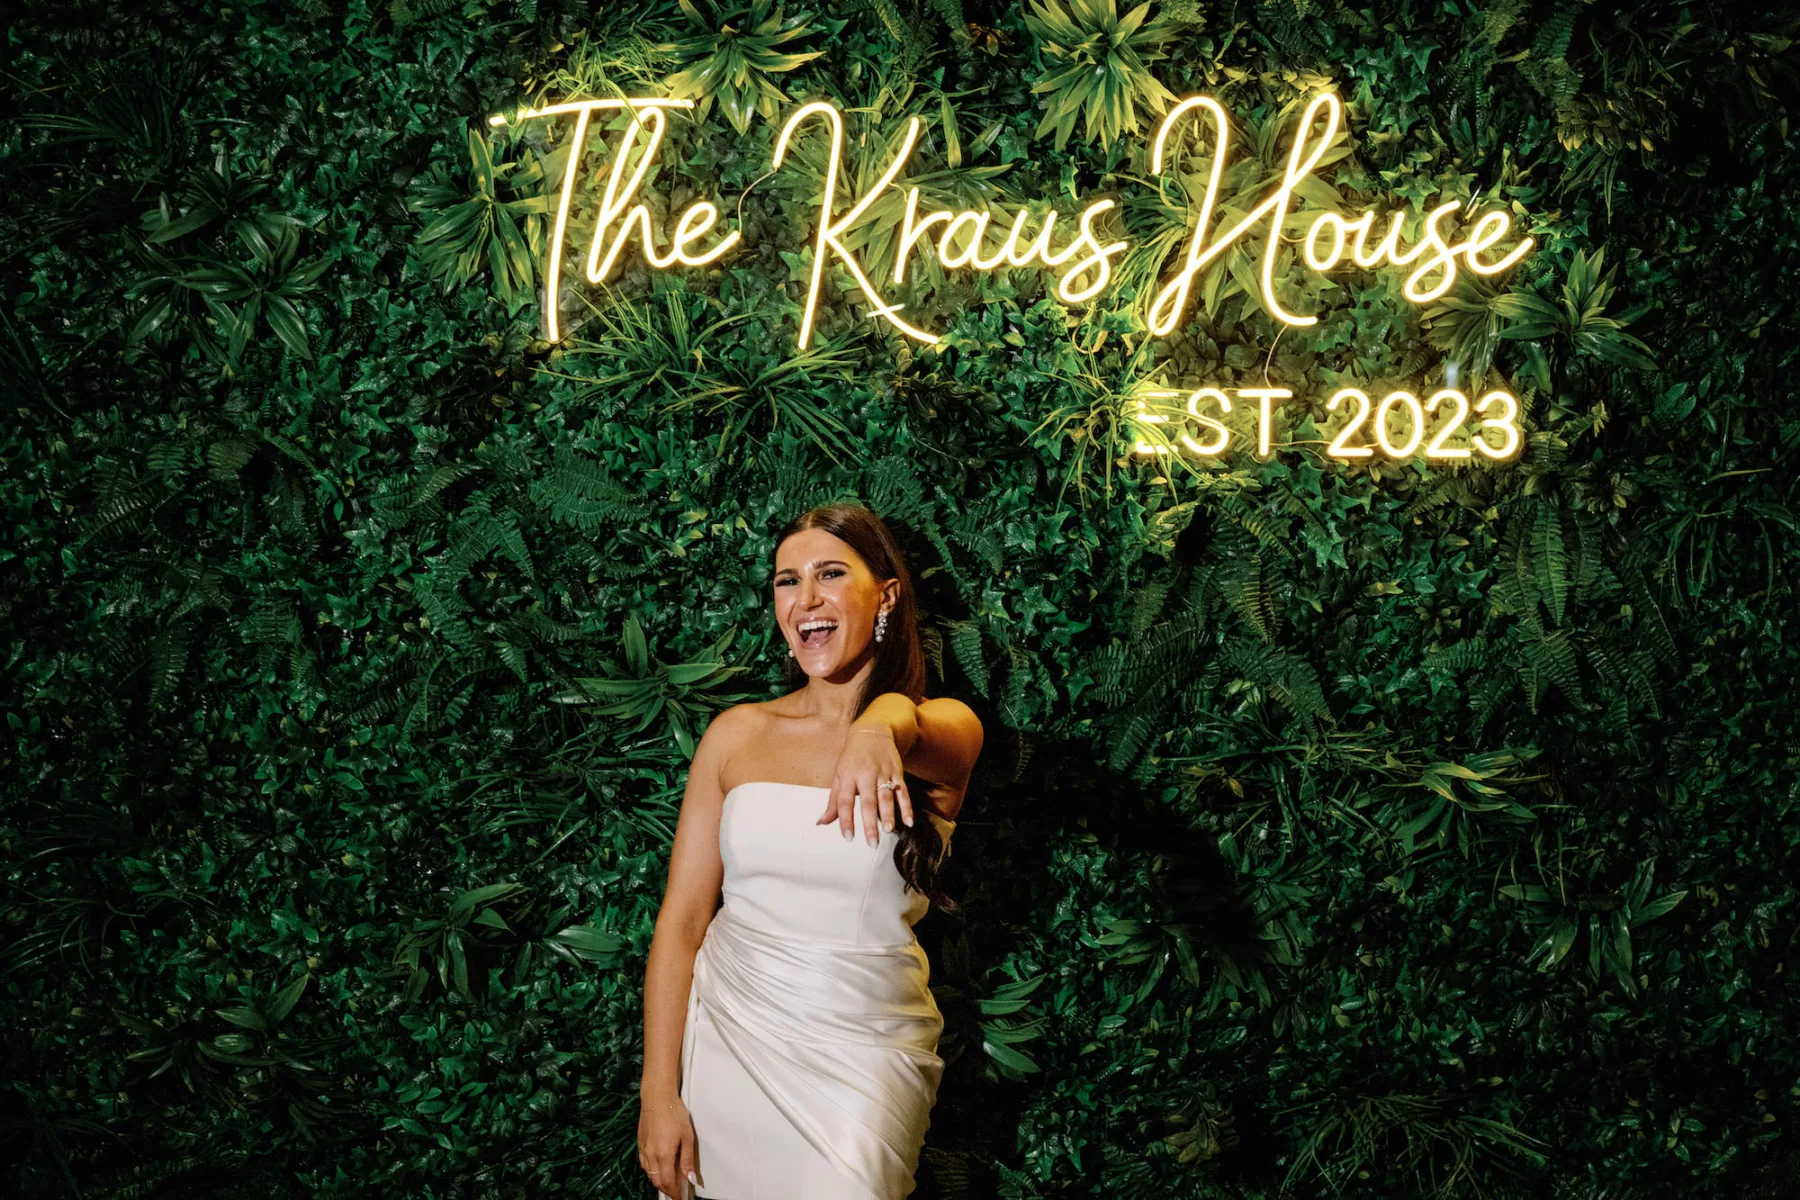 Custom Neon Sign with Grass Wall Backdrop Wedding Reception Decor Ideas